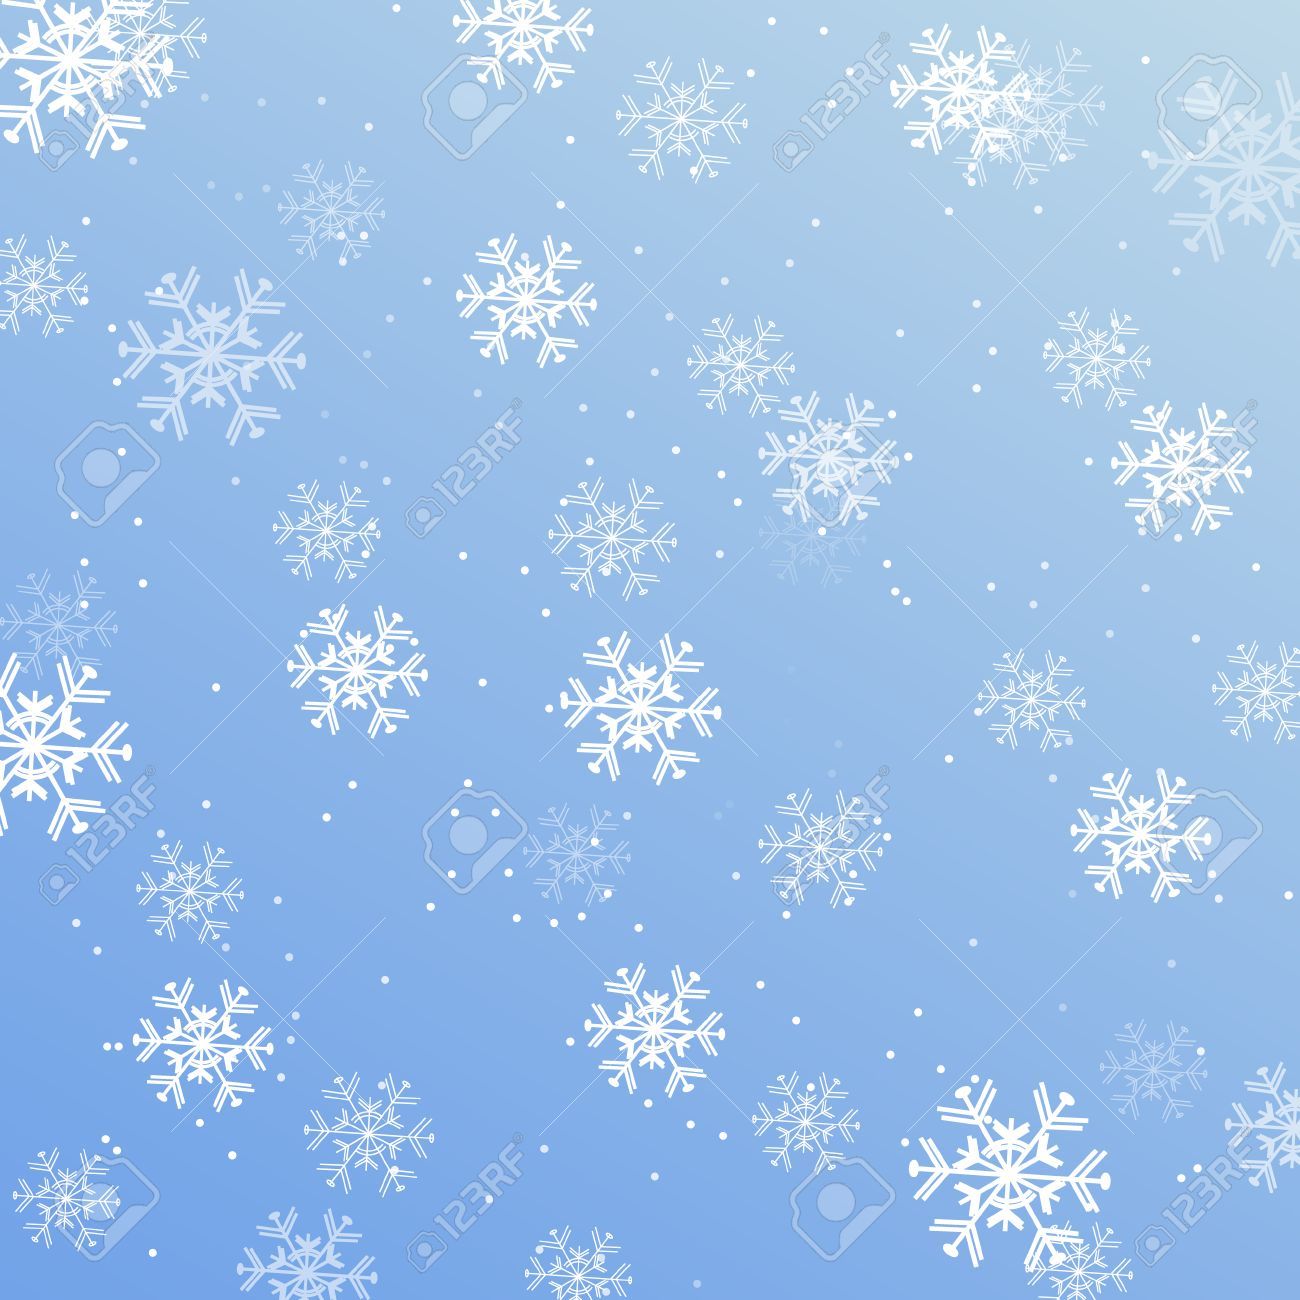 Snowflakes Desktop Background